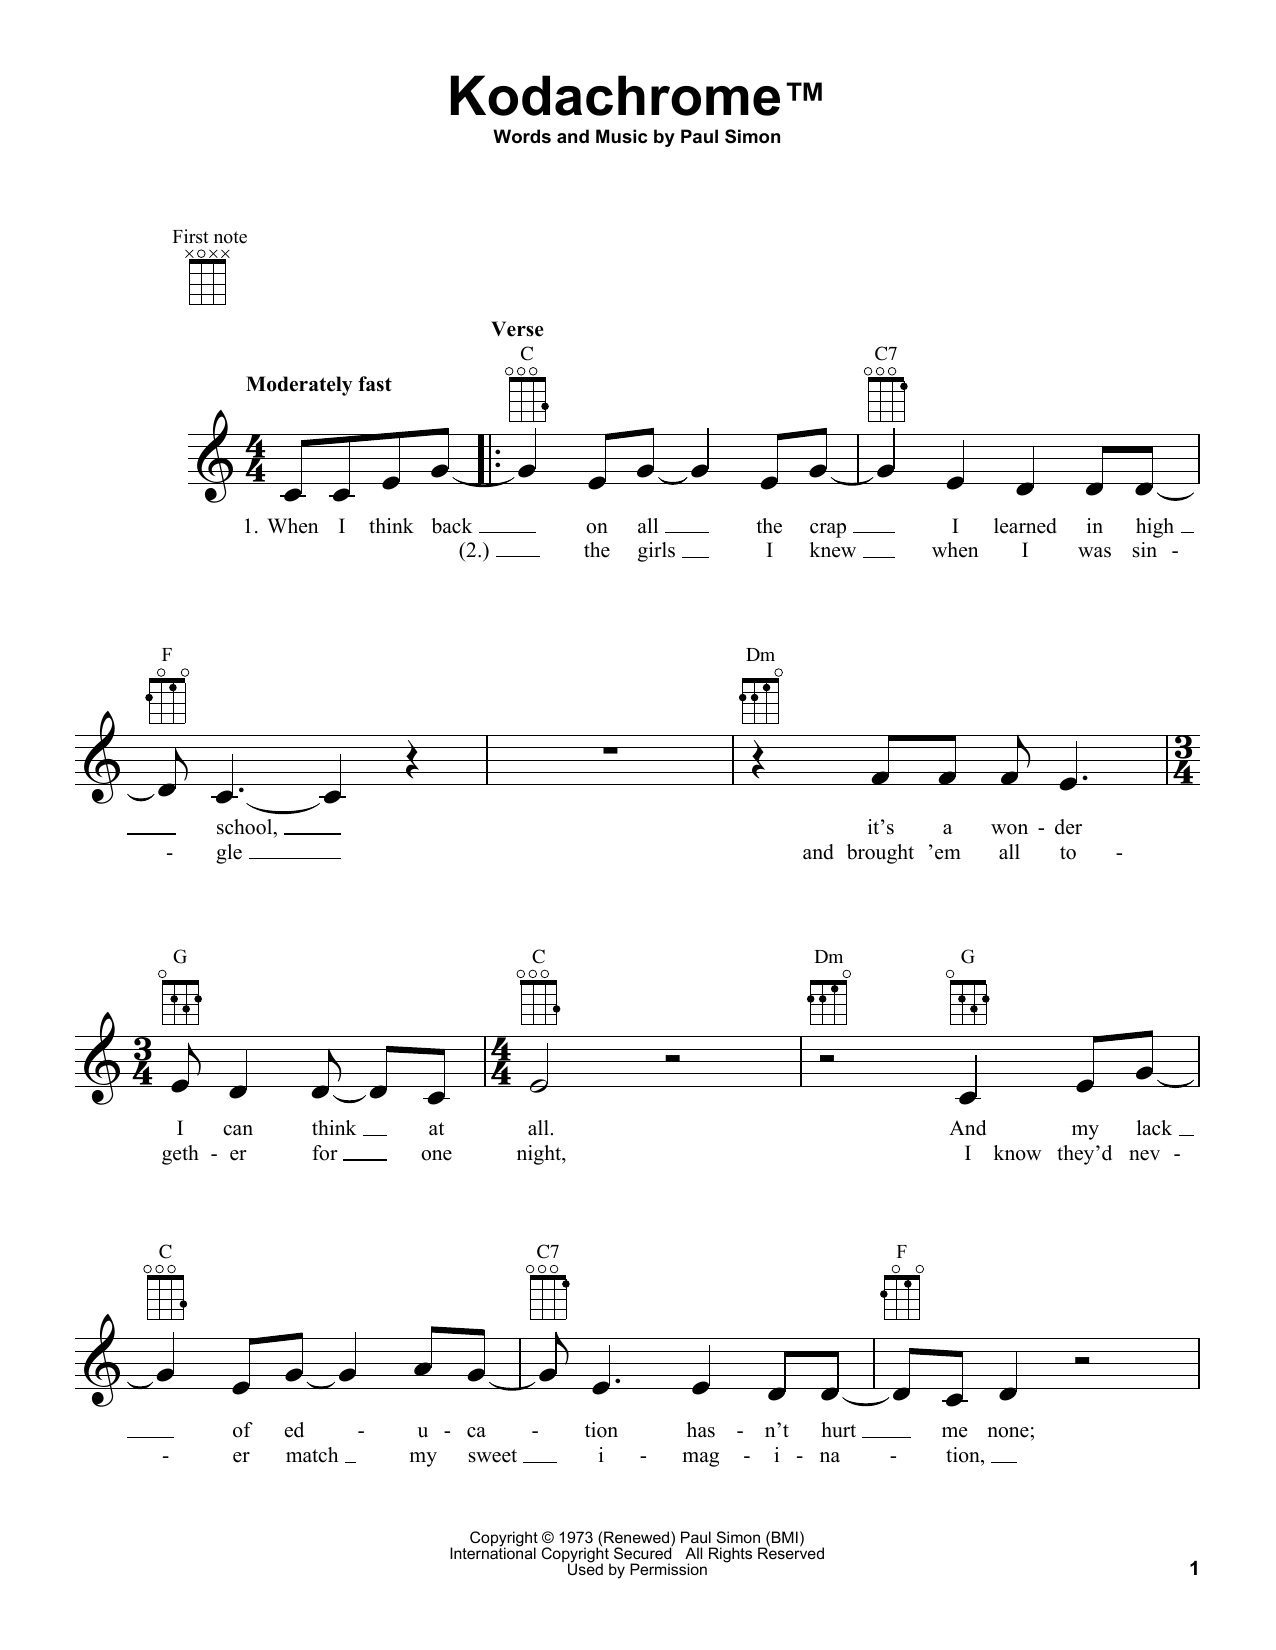 Paul Simon Kodachrome TM Sheet Music Notes & Chords for Ukulele - Download or Print PDF